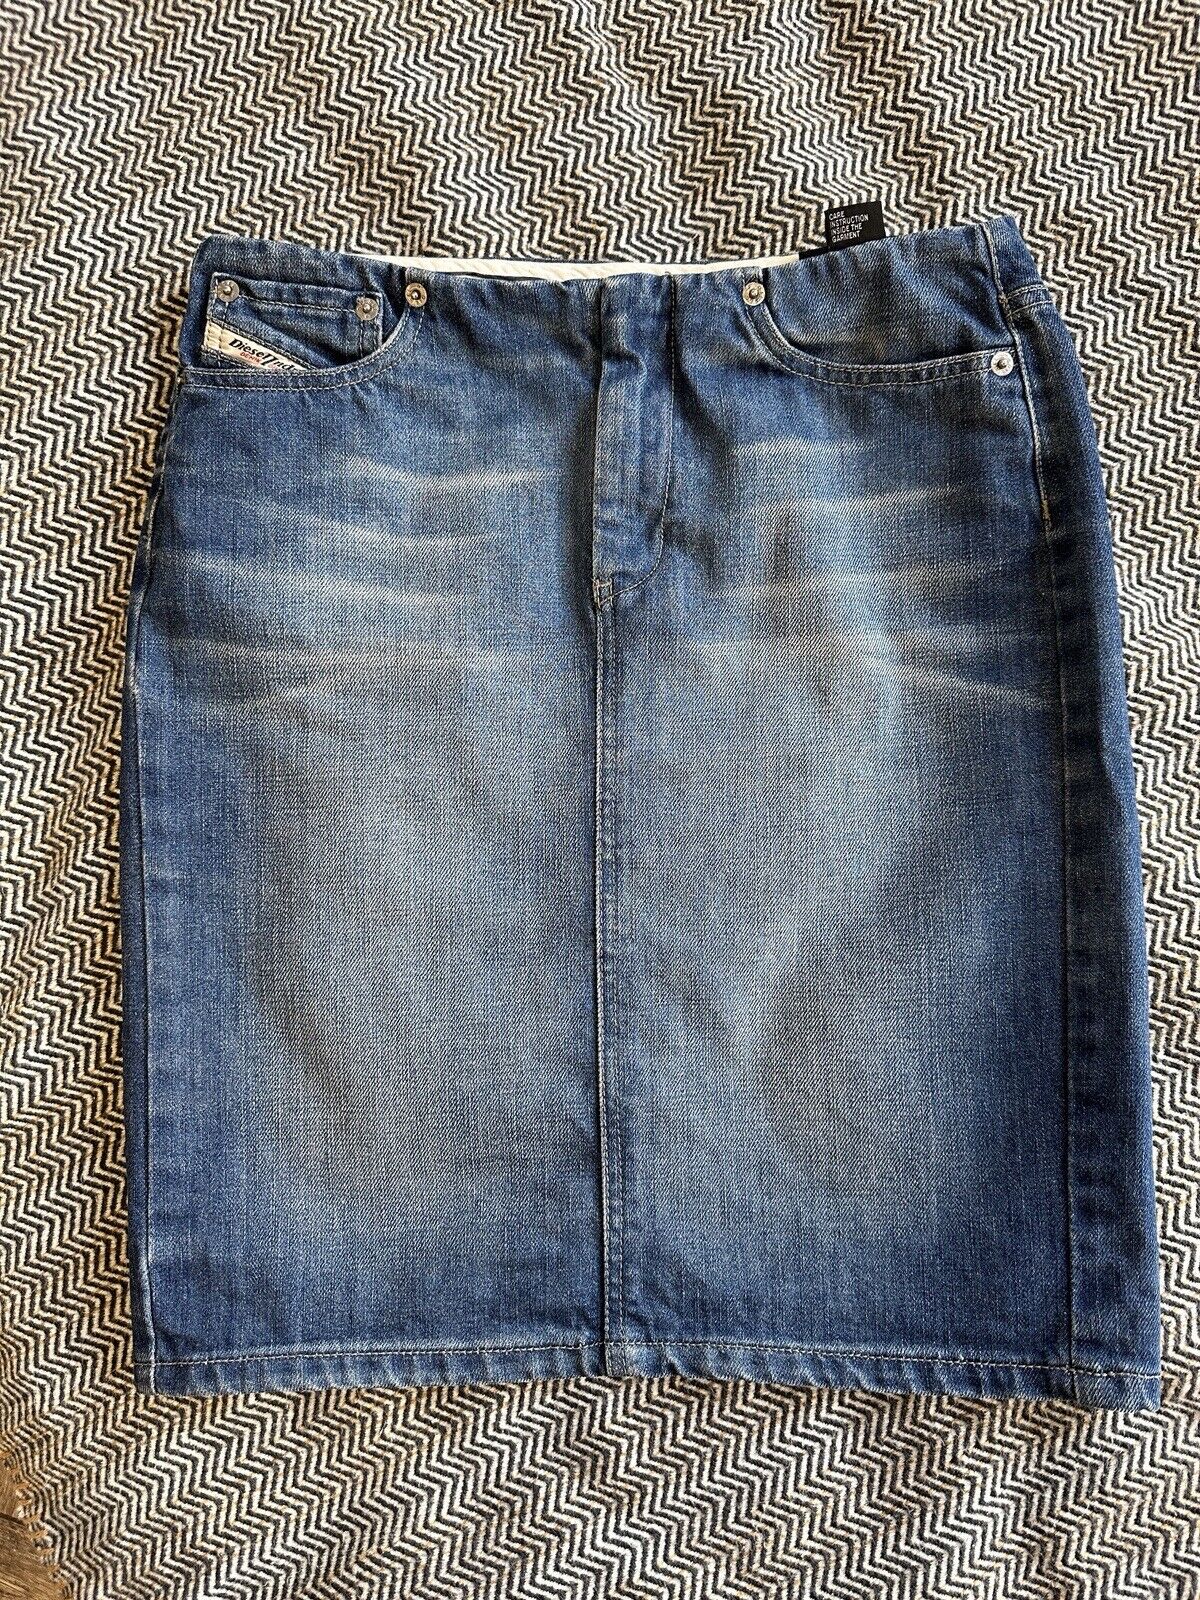 Vintage Diesel Denim Cotton Pencil Skirt Blue Siz… - image 9